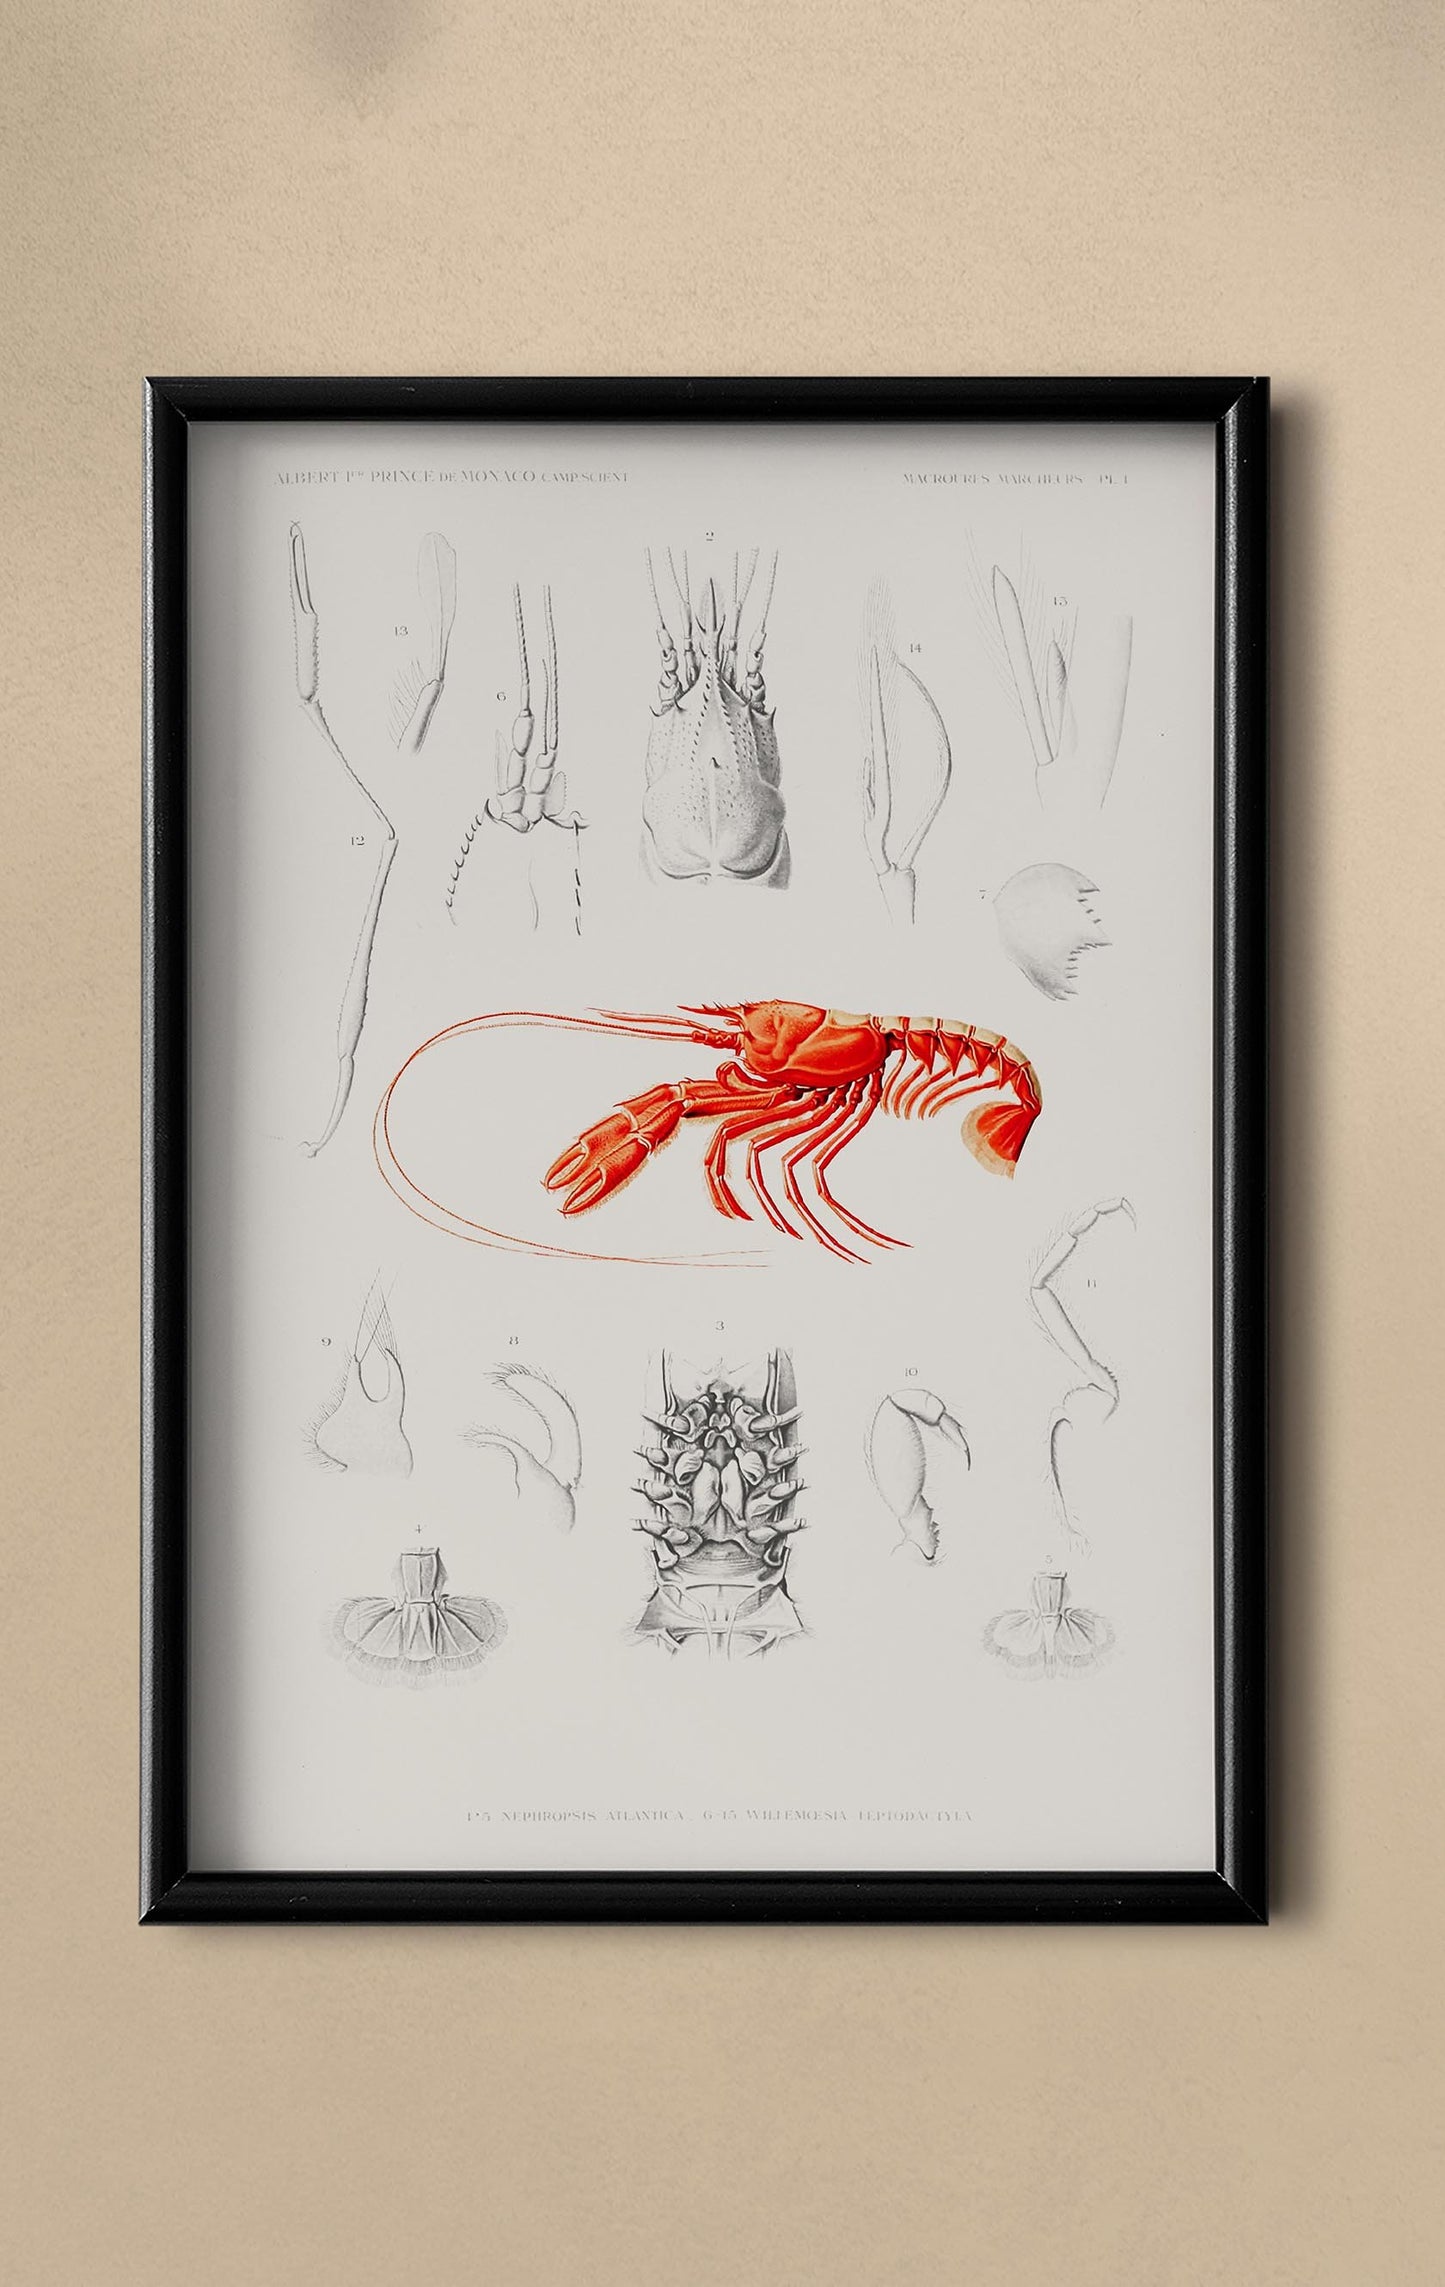 Shrimps External and Internal Organs Poster